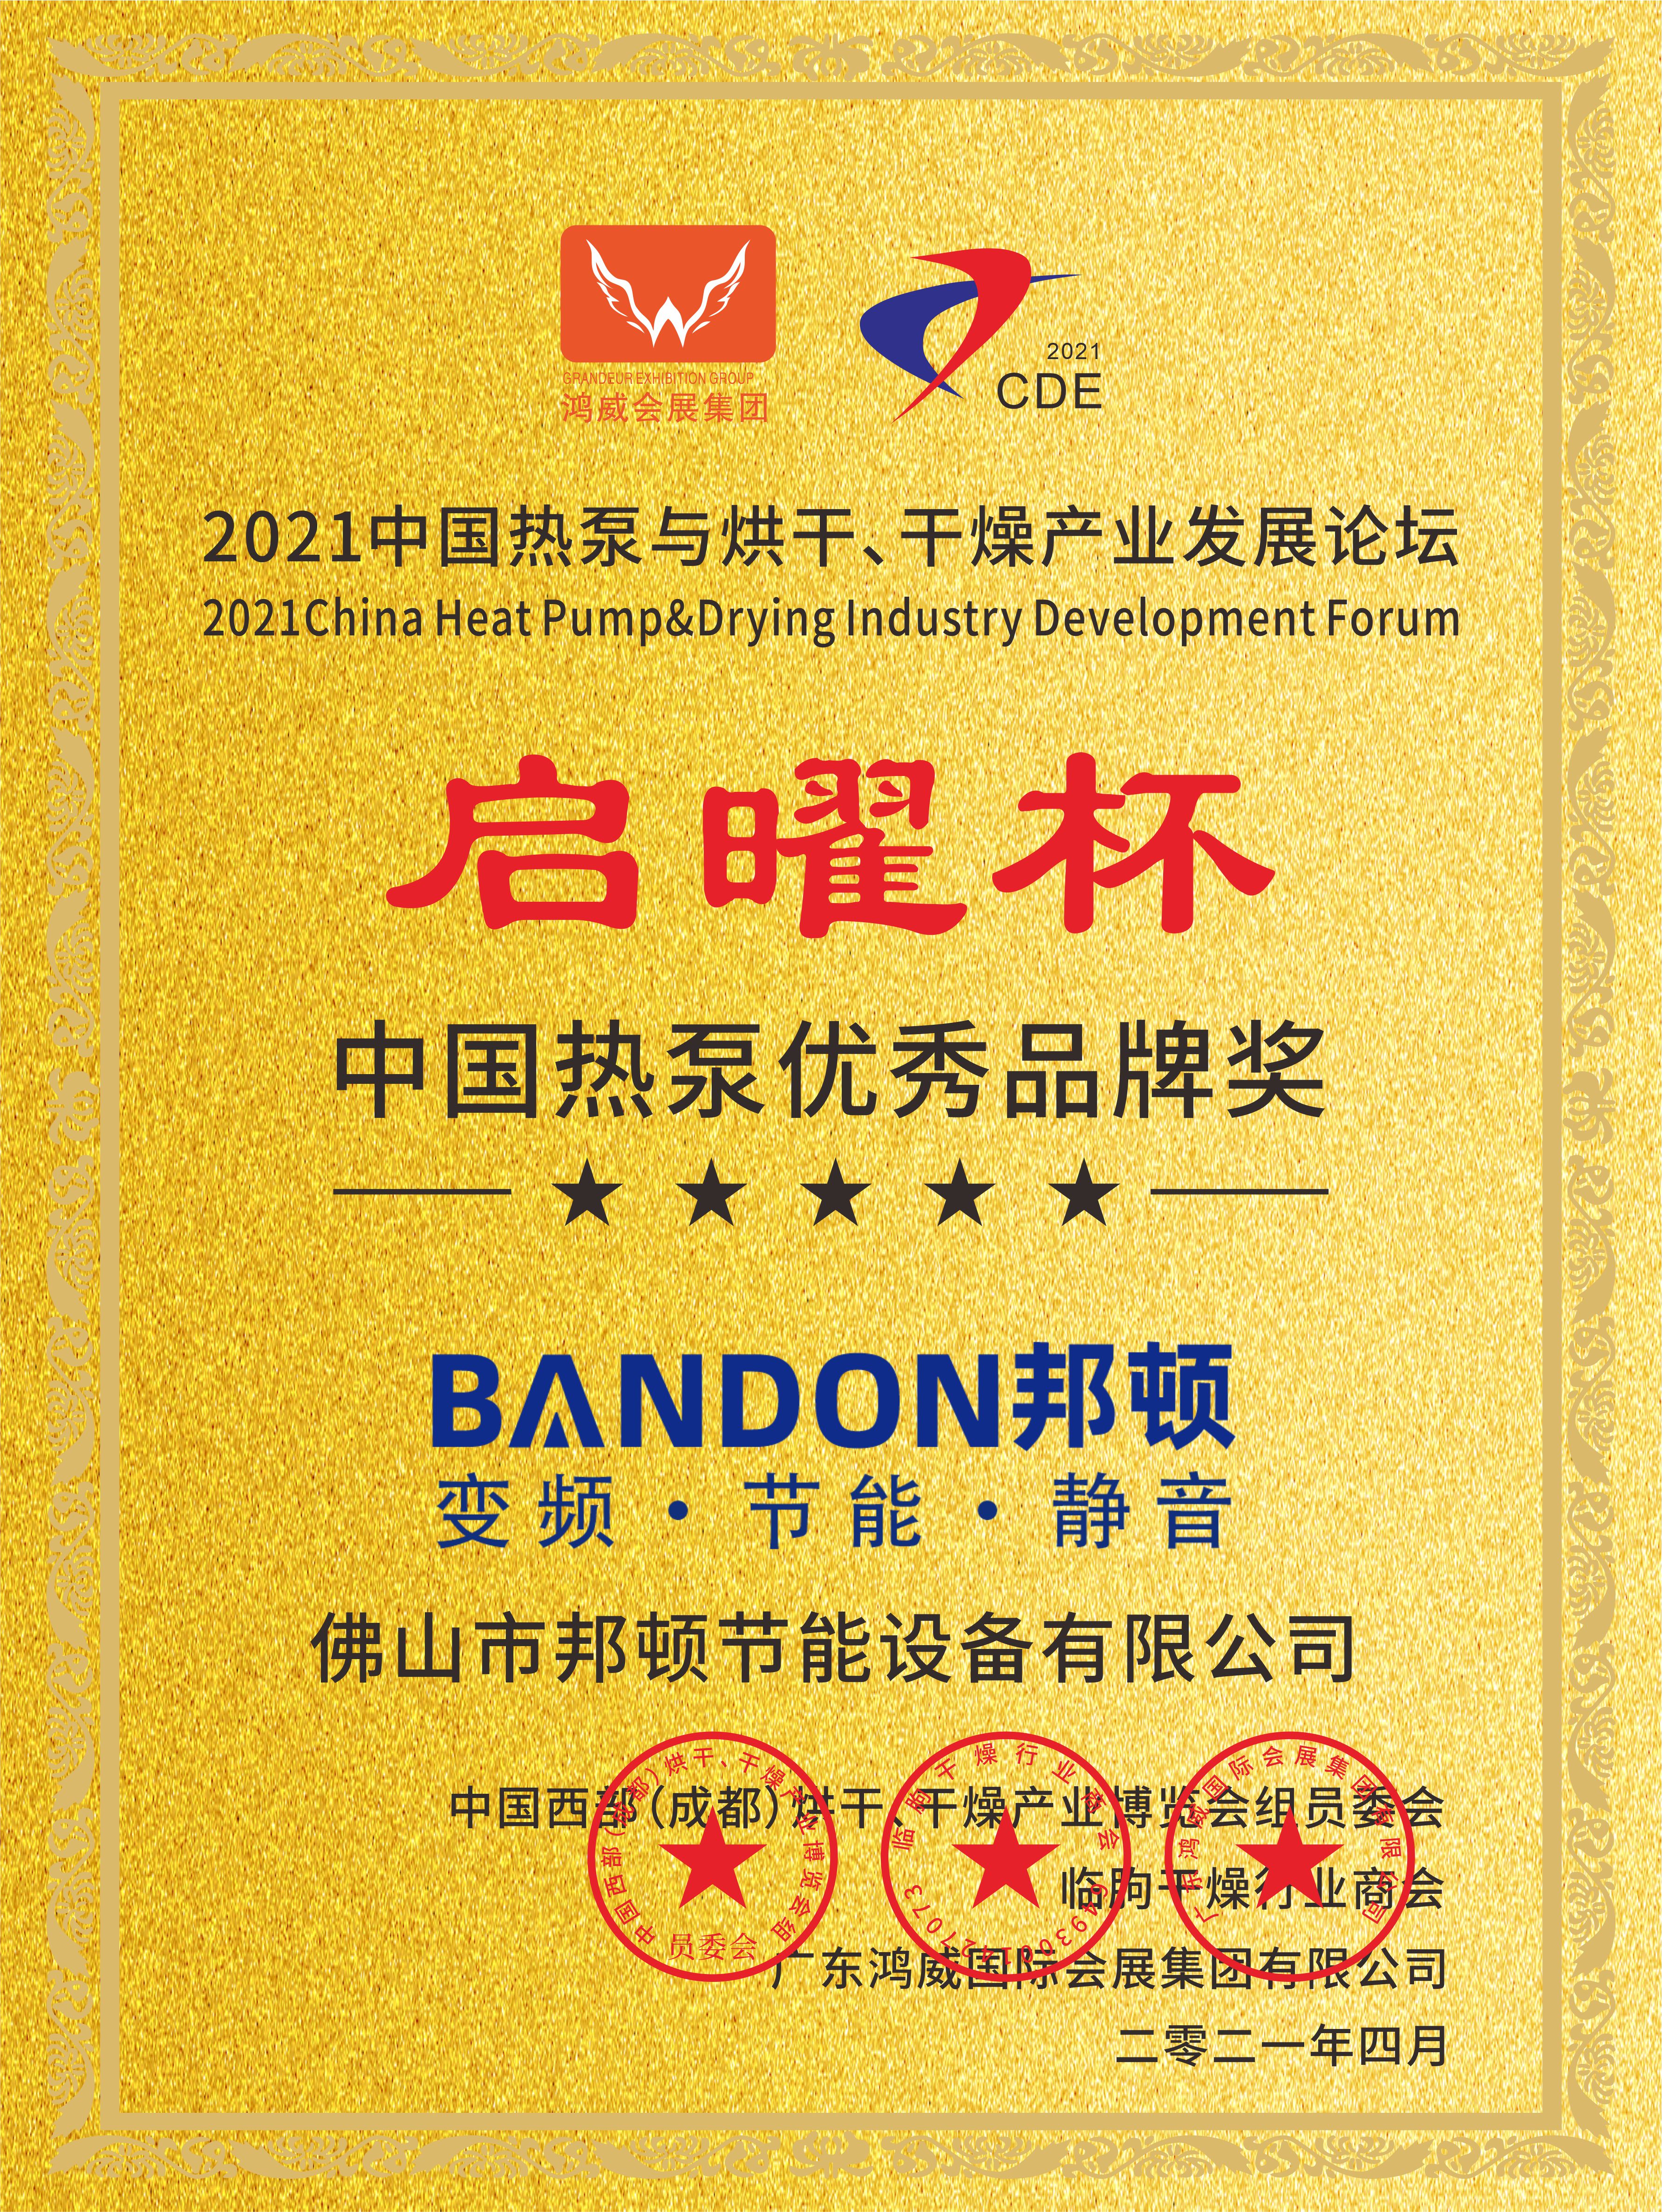  2021: China Heat Pump Excellent Brand Award